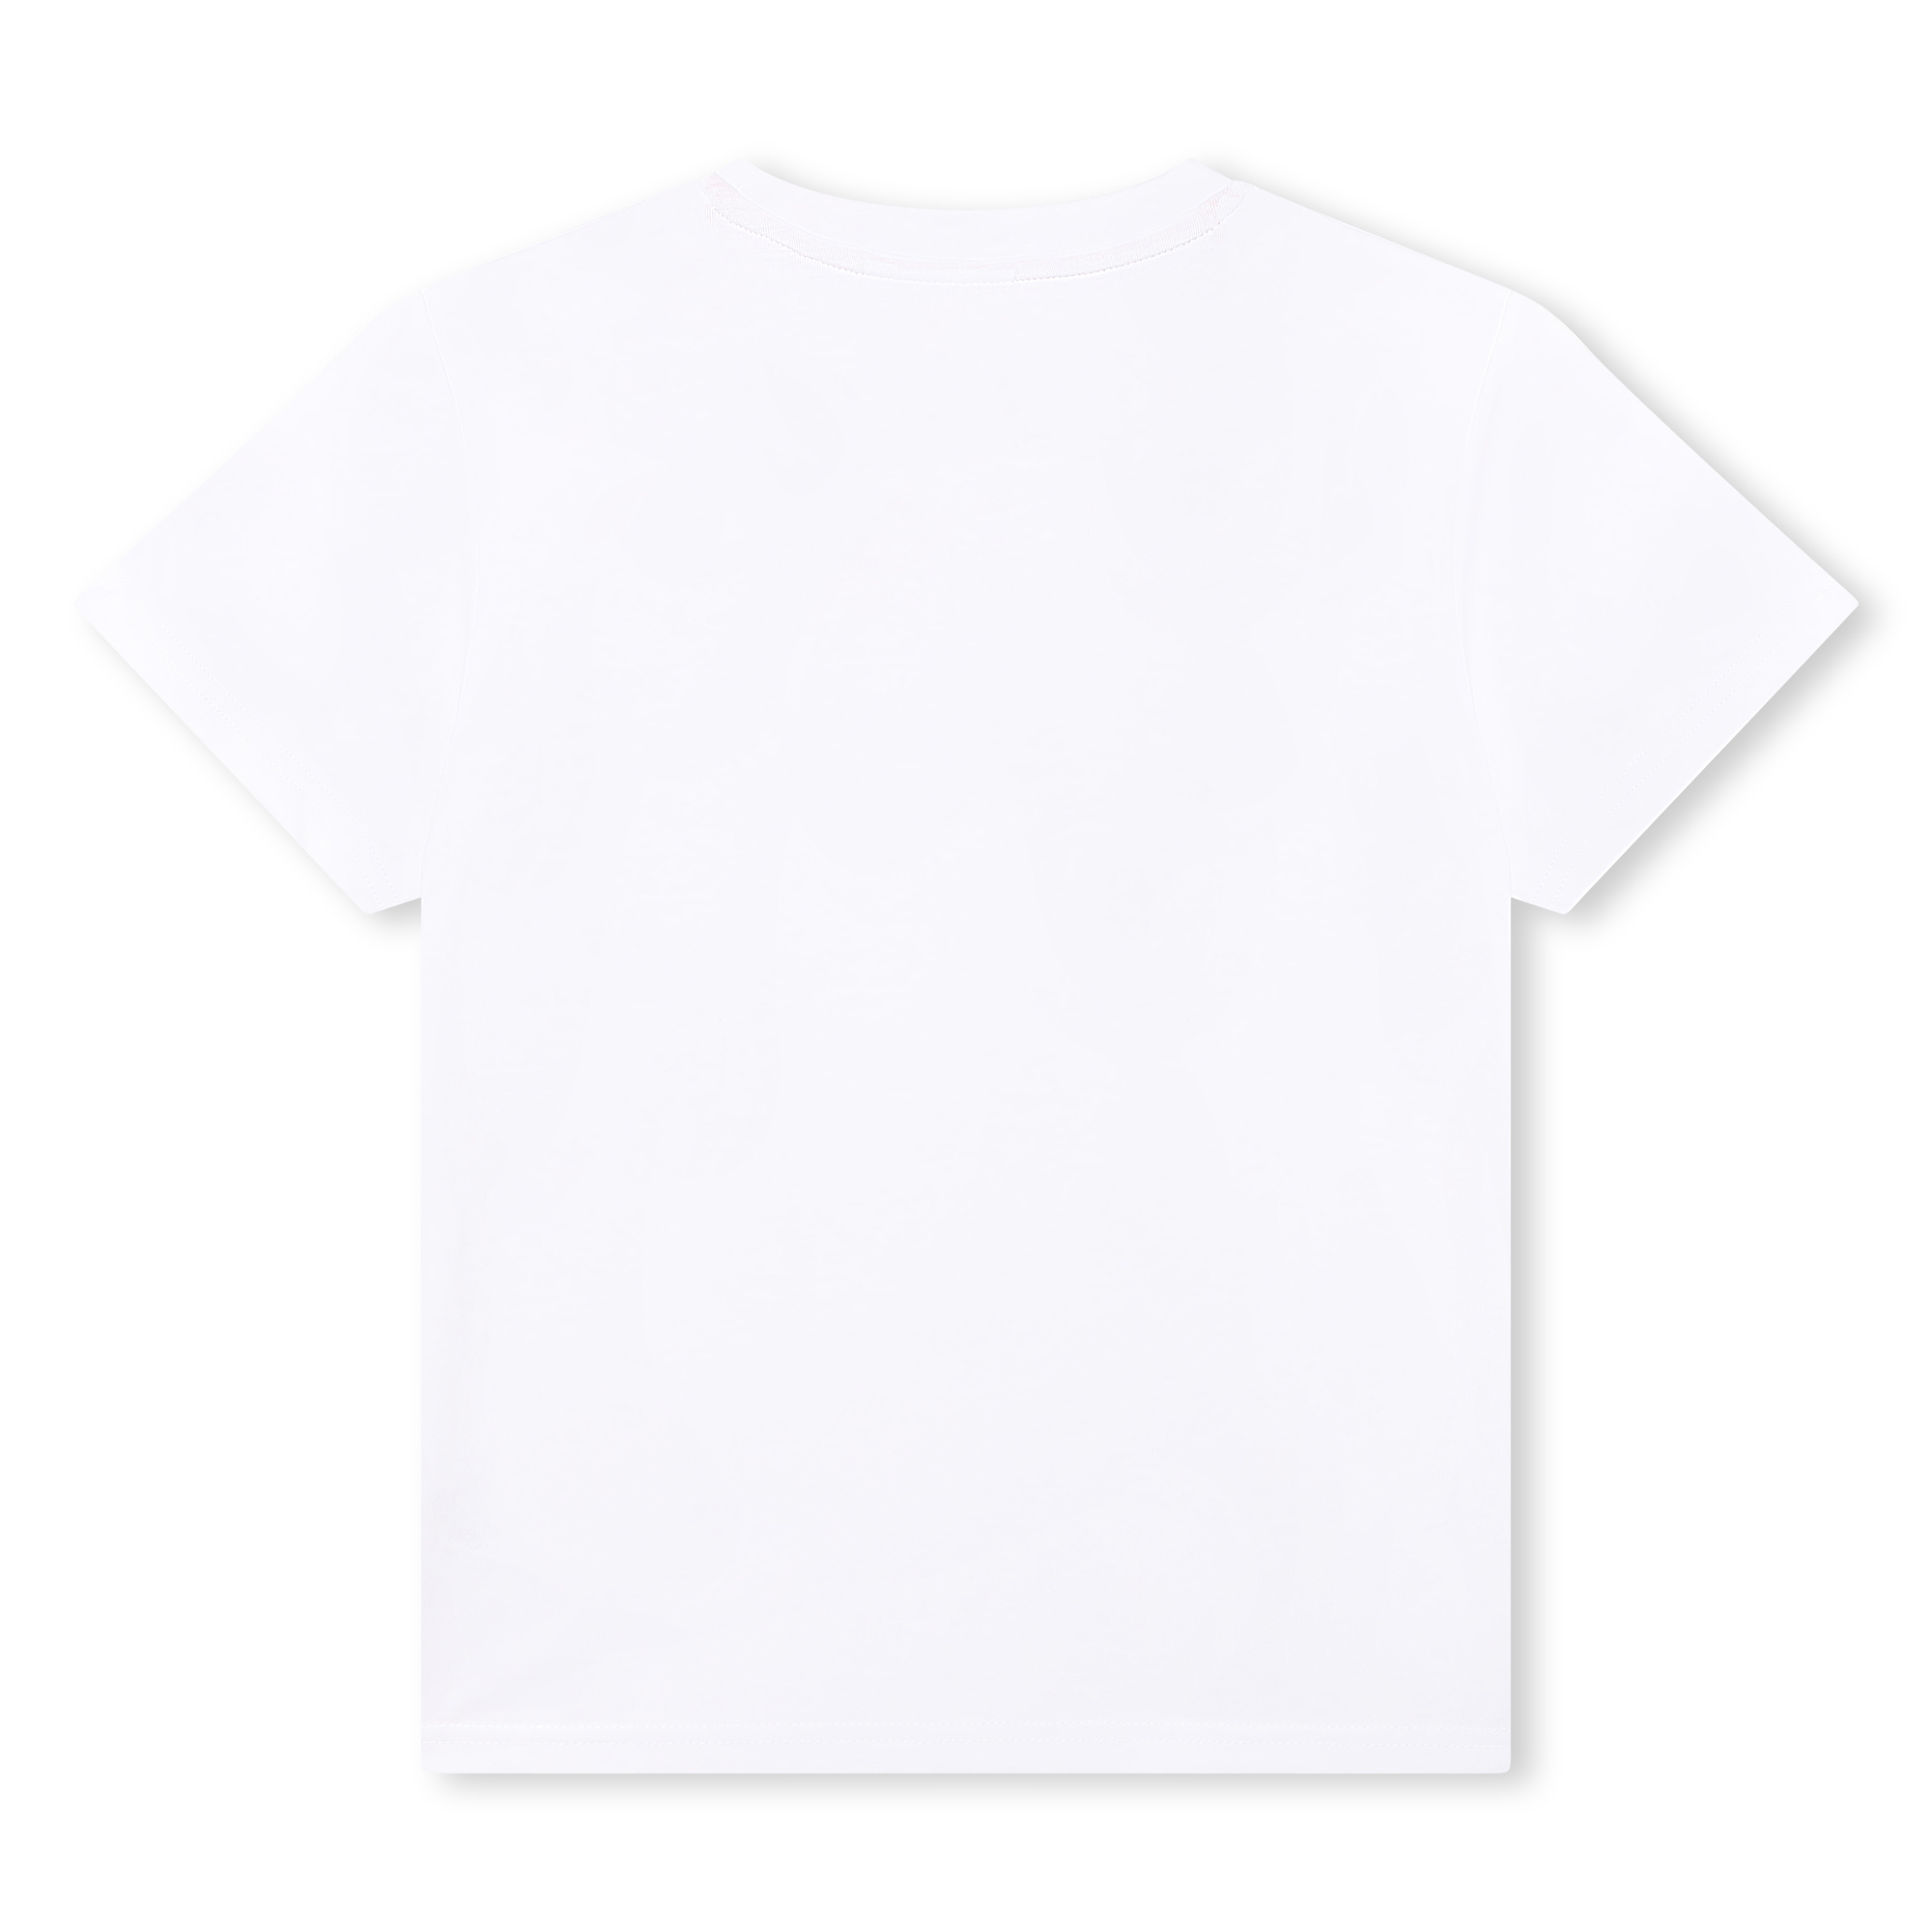 T-shirt with logo print HUGO for BOY